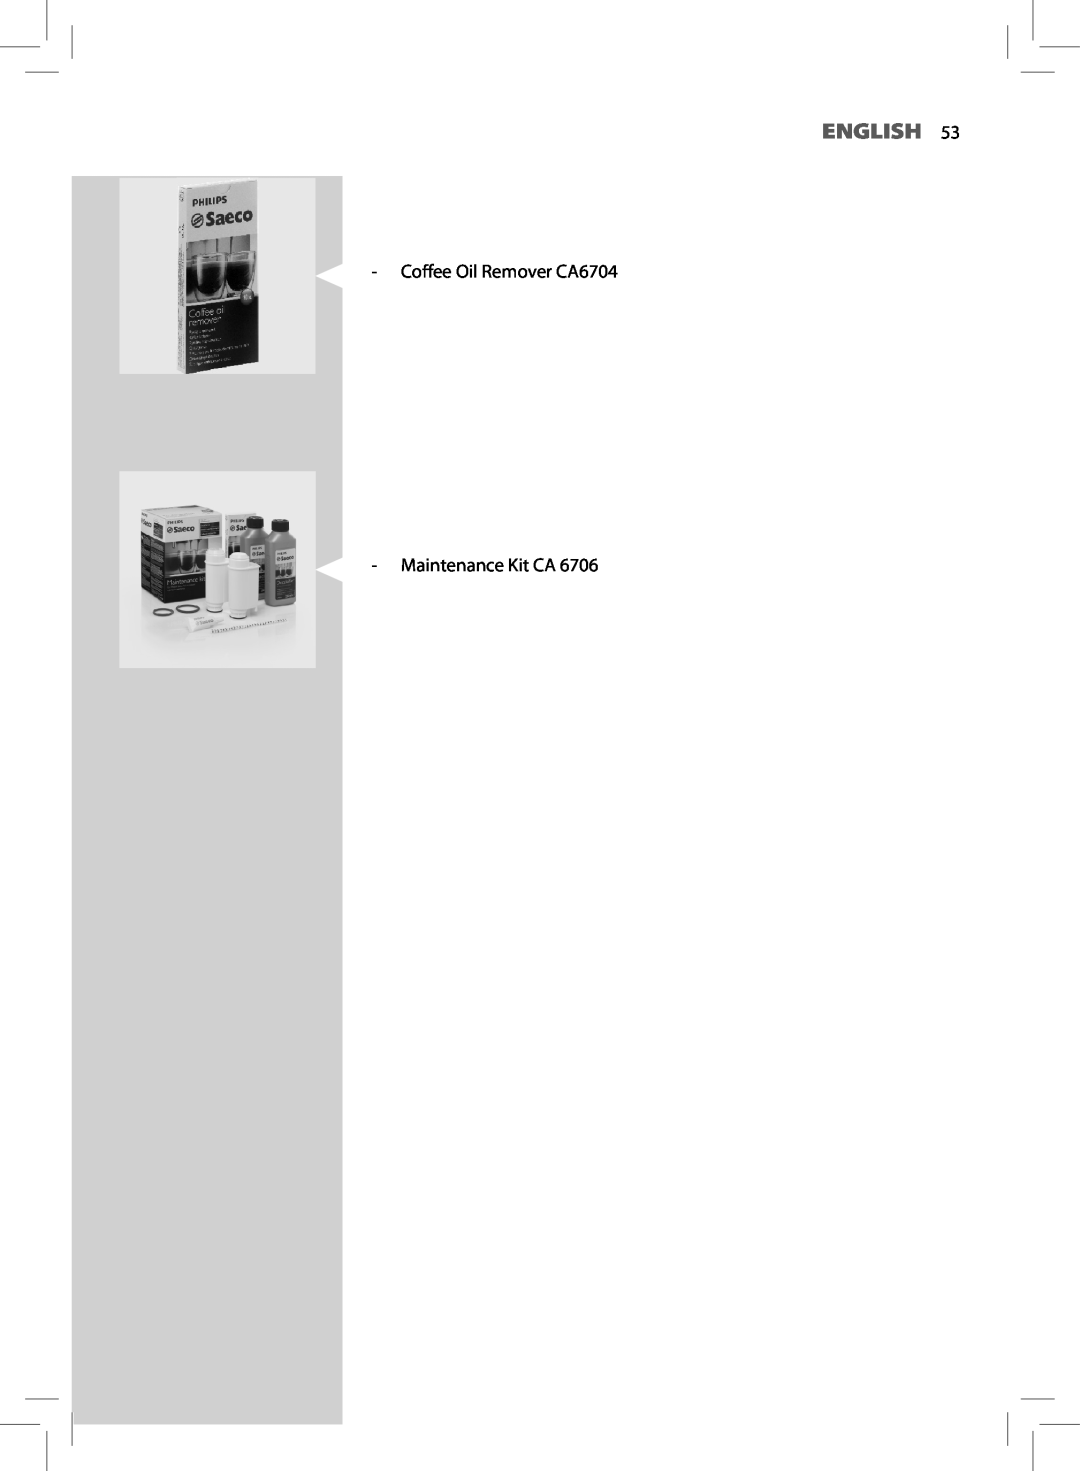 Saeco Coffee Makers HD8775 user manual English, Coffee Oil Remover CA6704 Maintenance Kit CA 